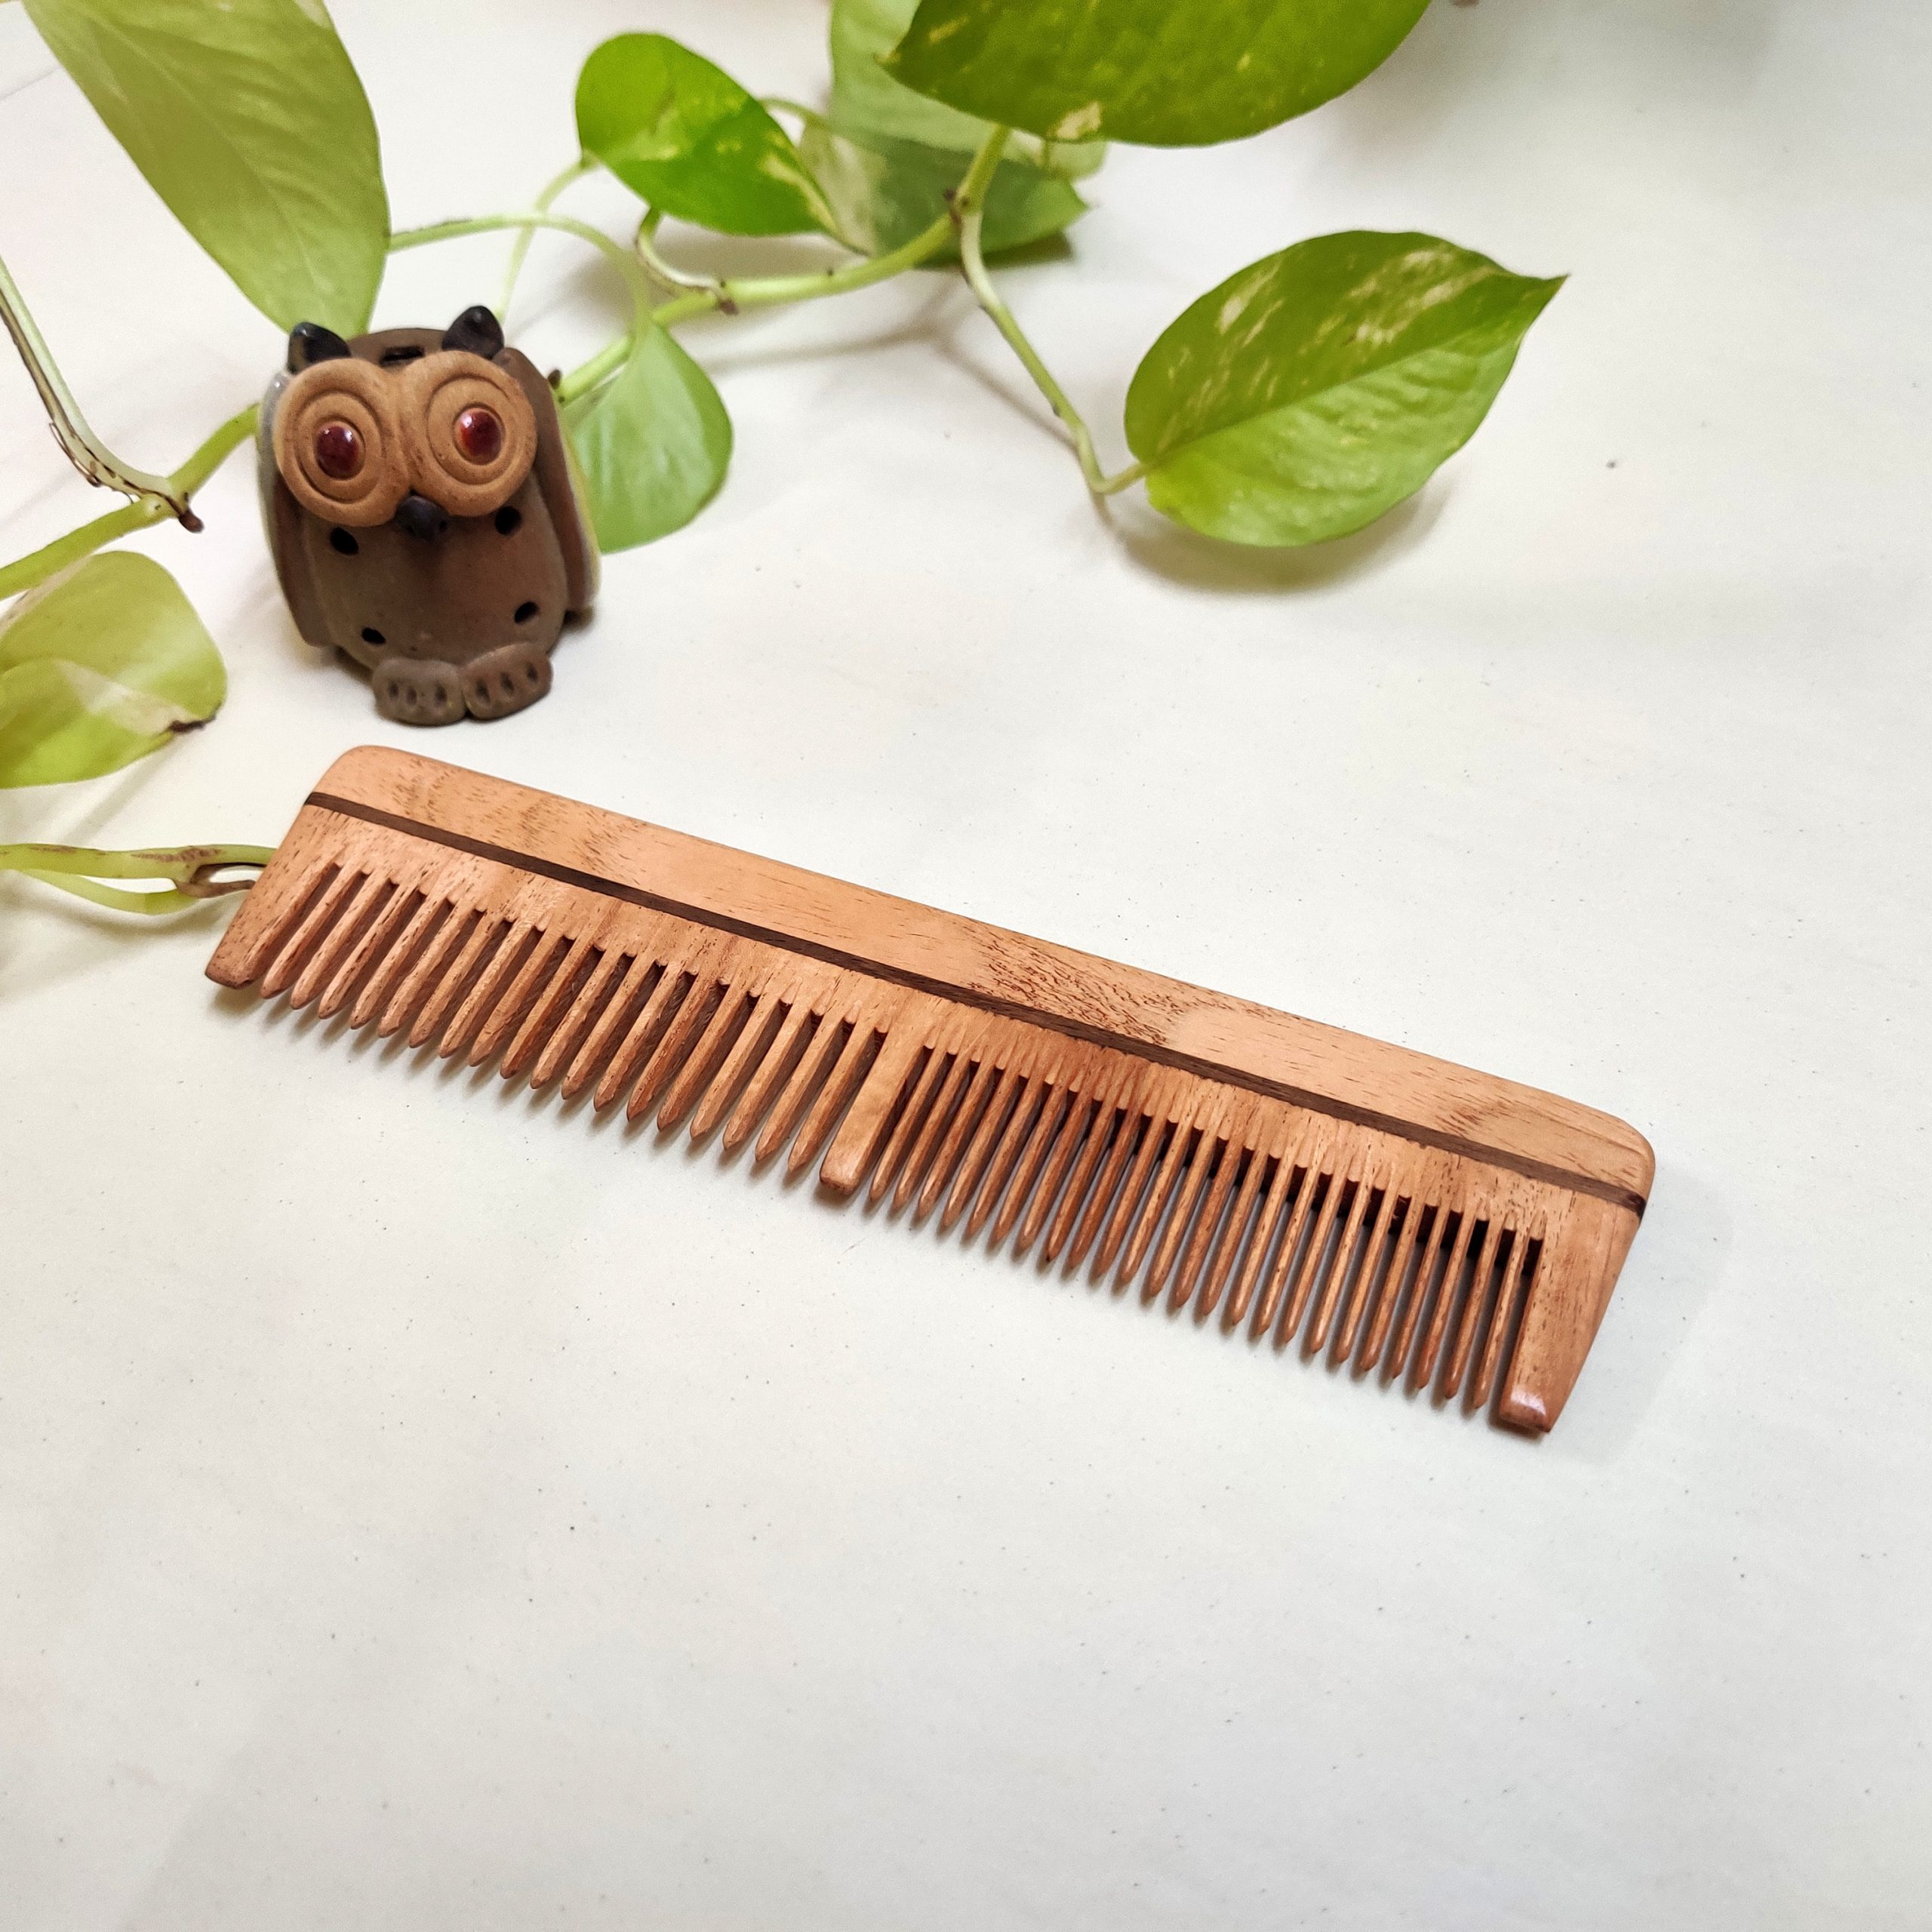 Dual teeth comb made of neem